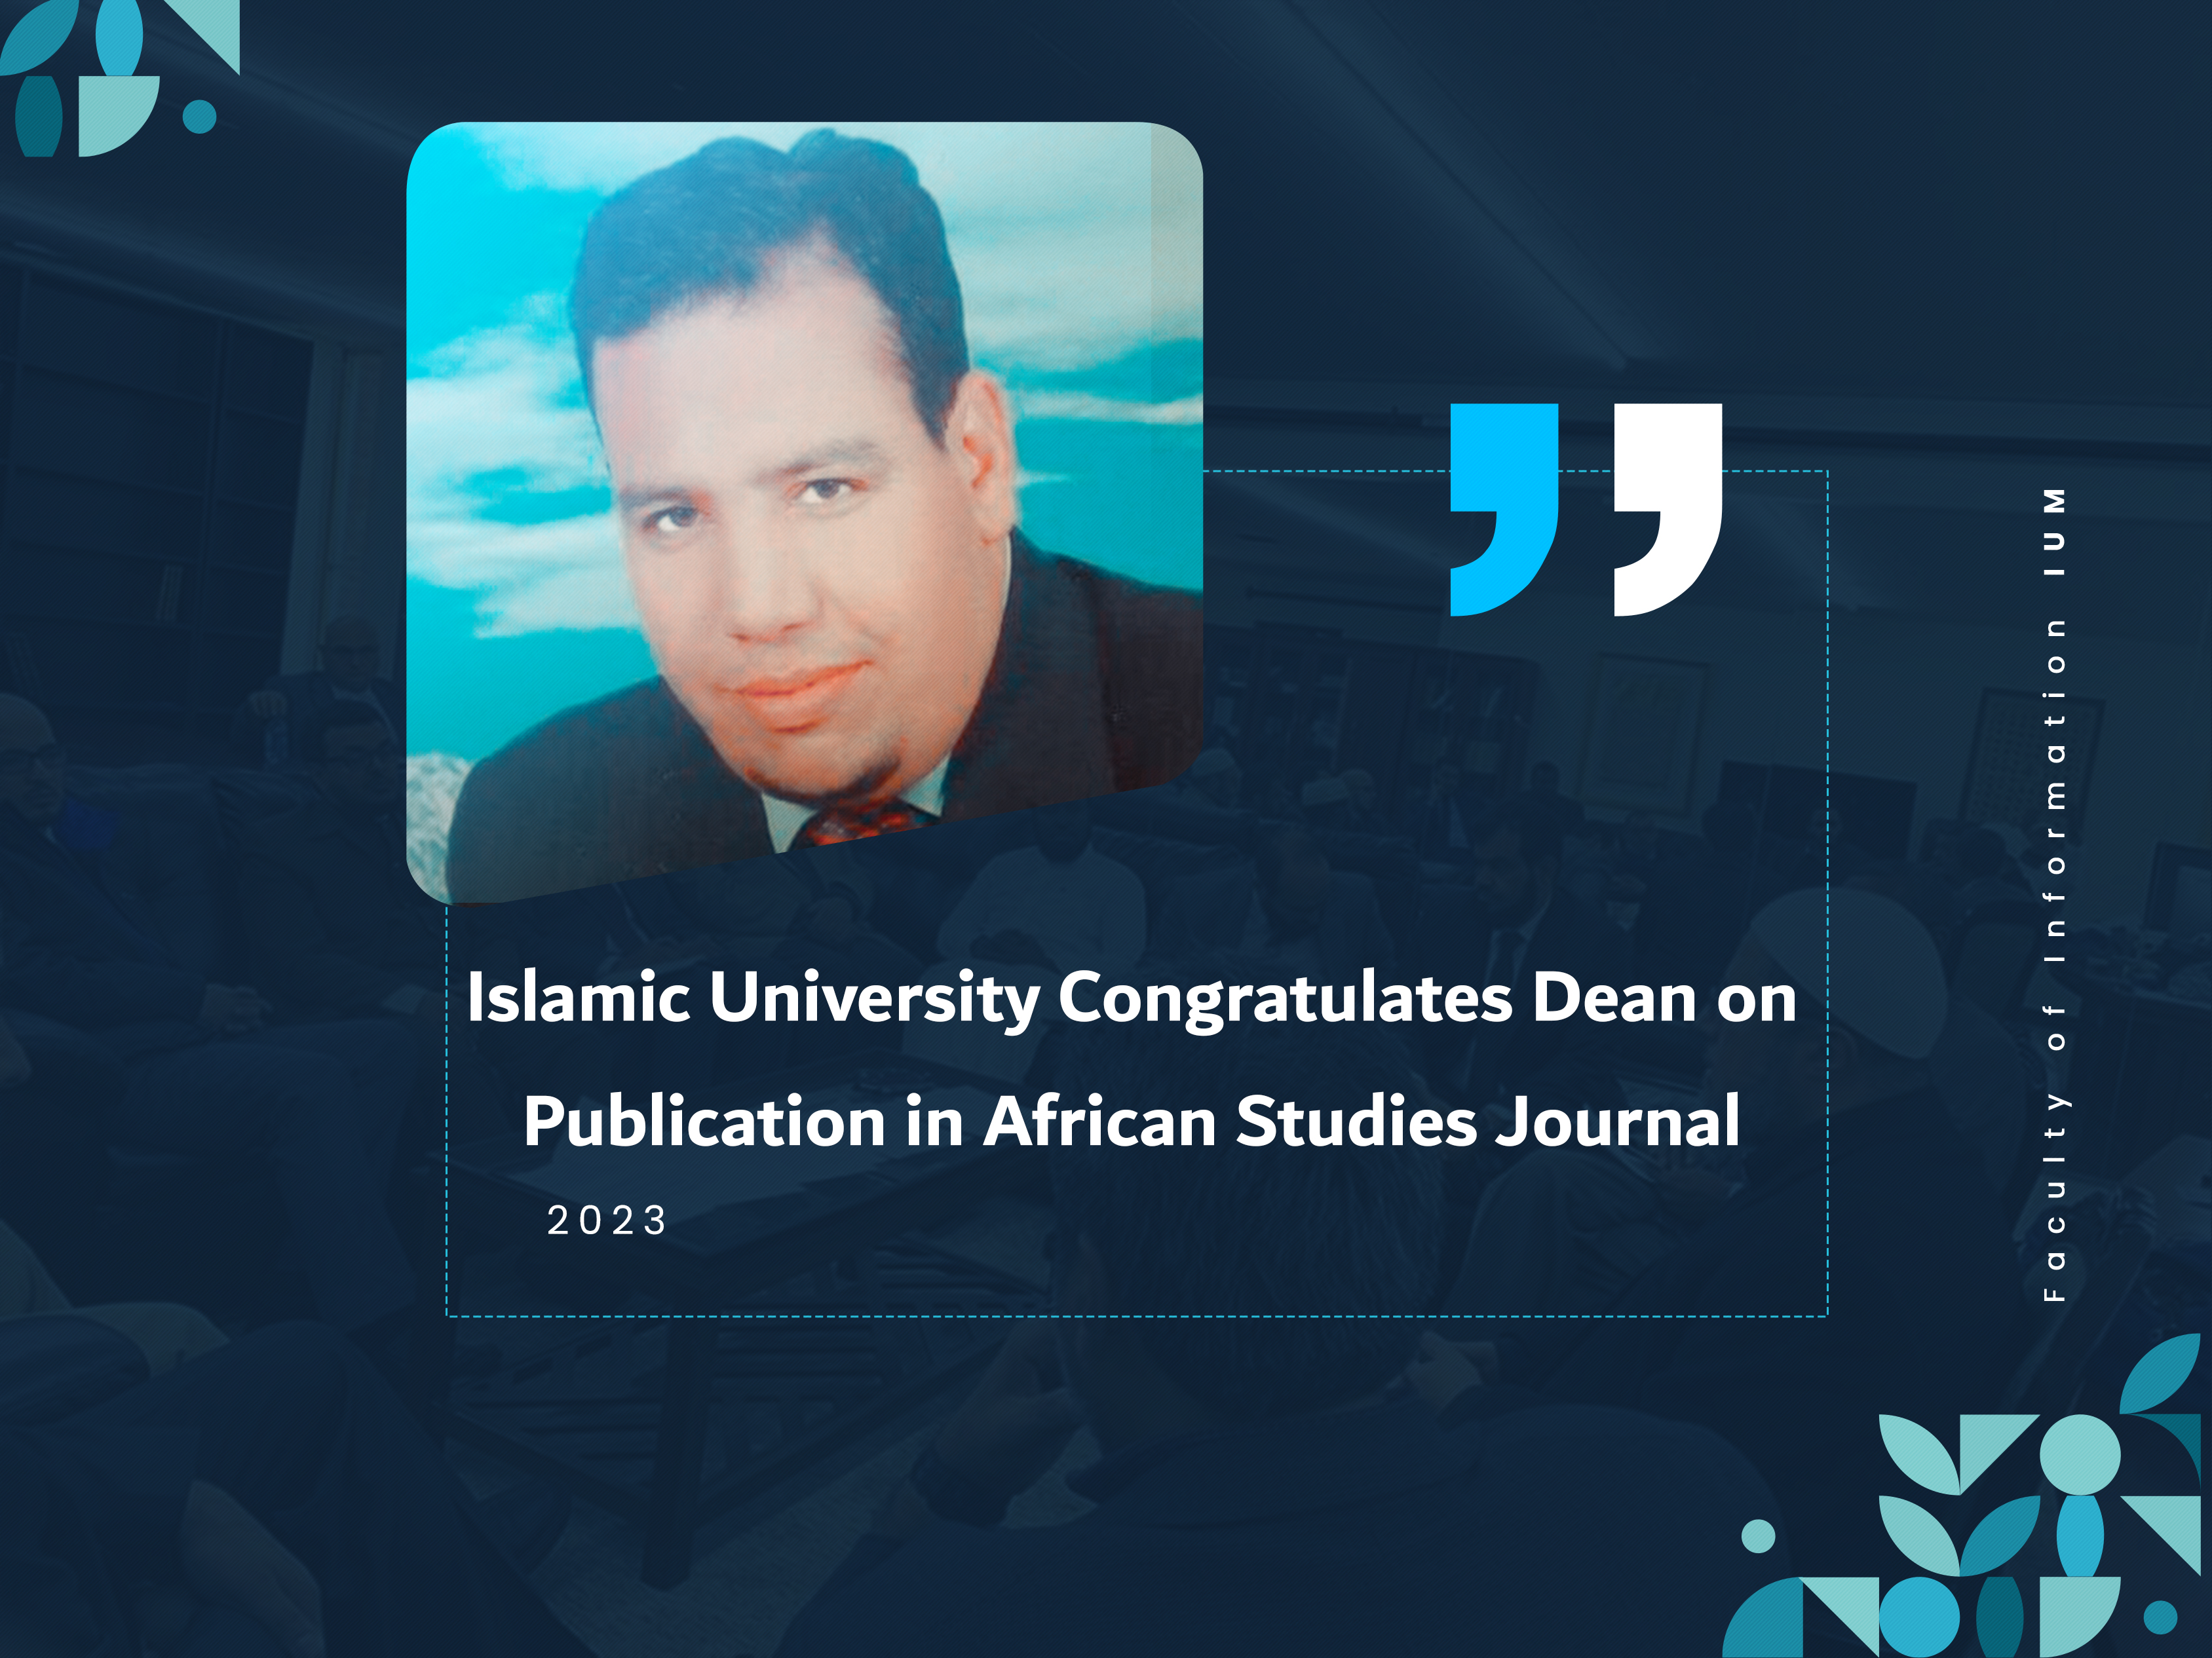 Islamic University Congratulates Dean on Publication in African Studies Journal